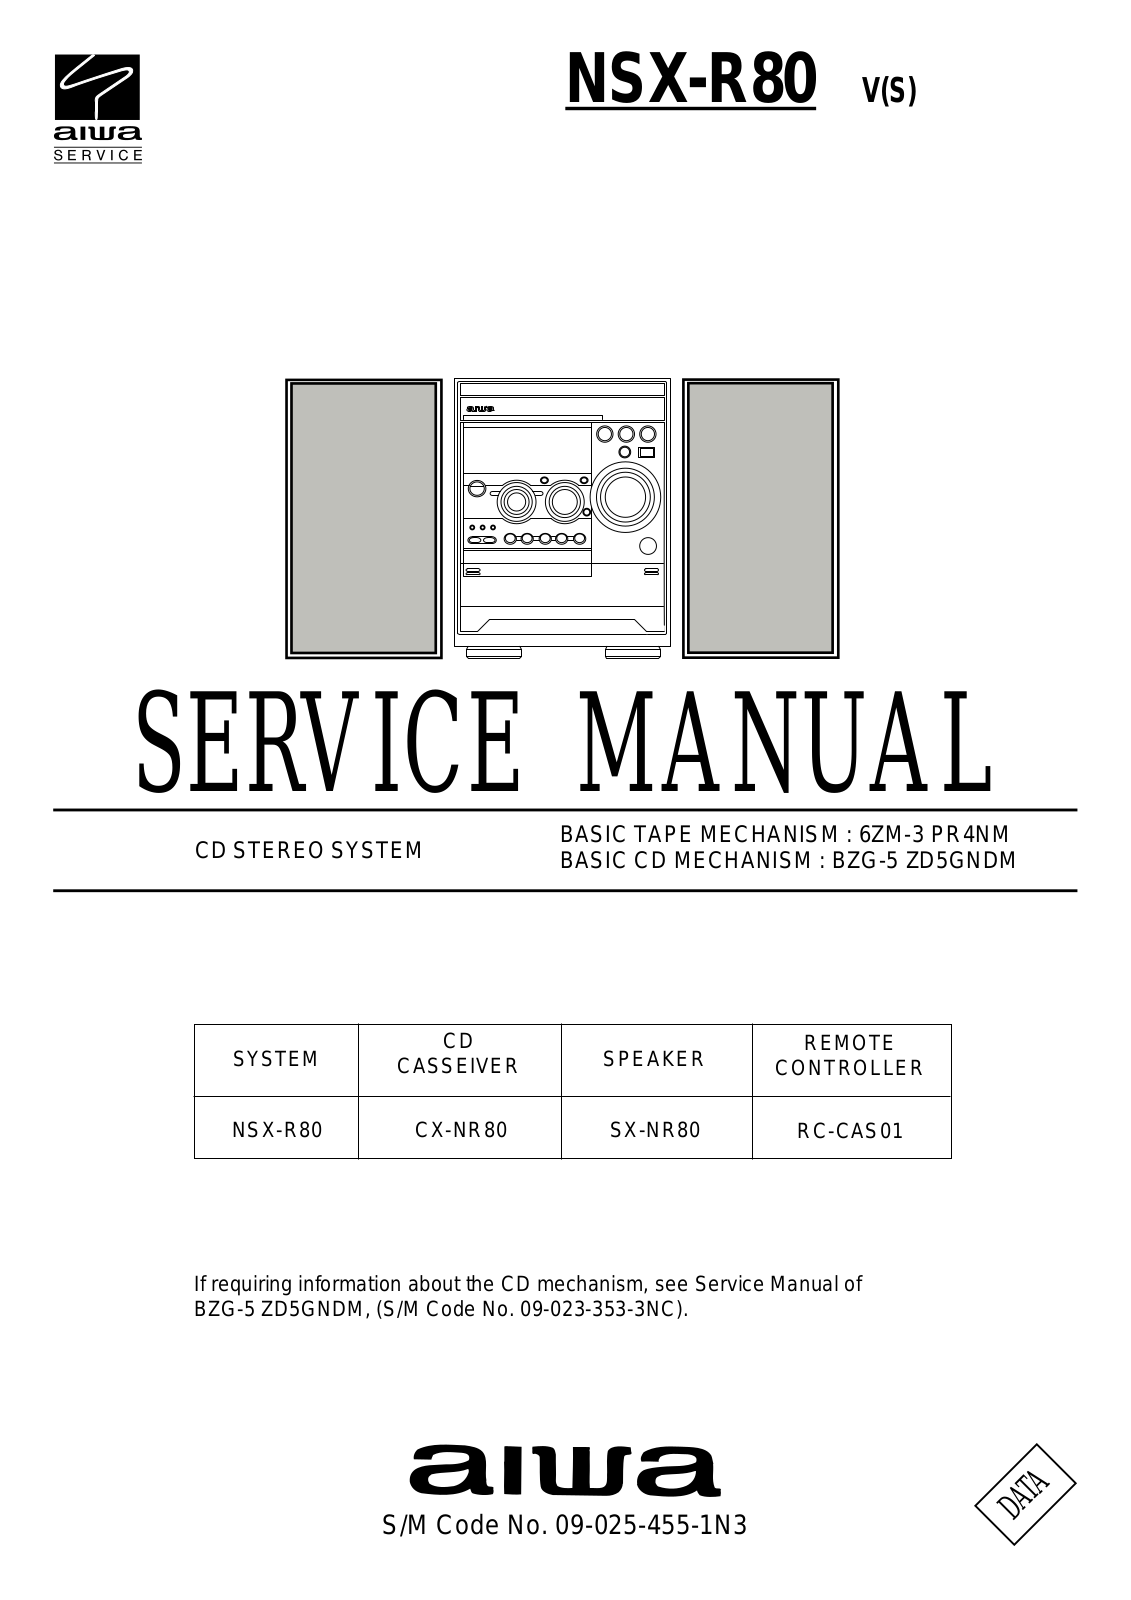 Aiwa NSRX80, CX-NR80V Service Manual